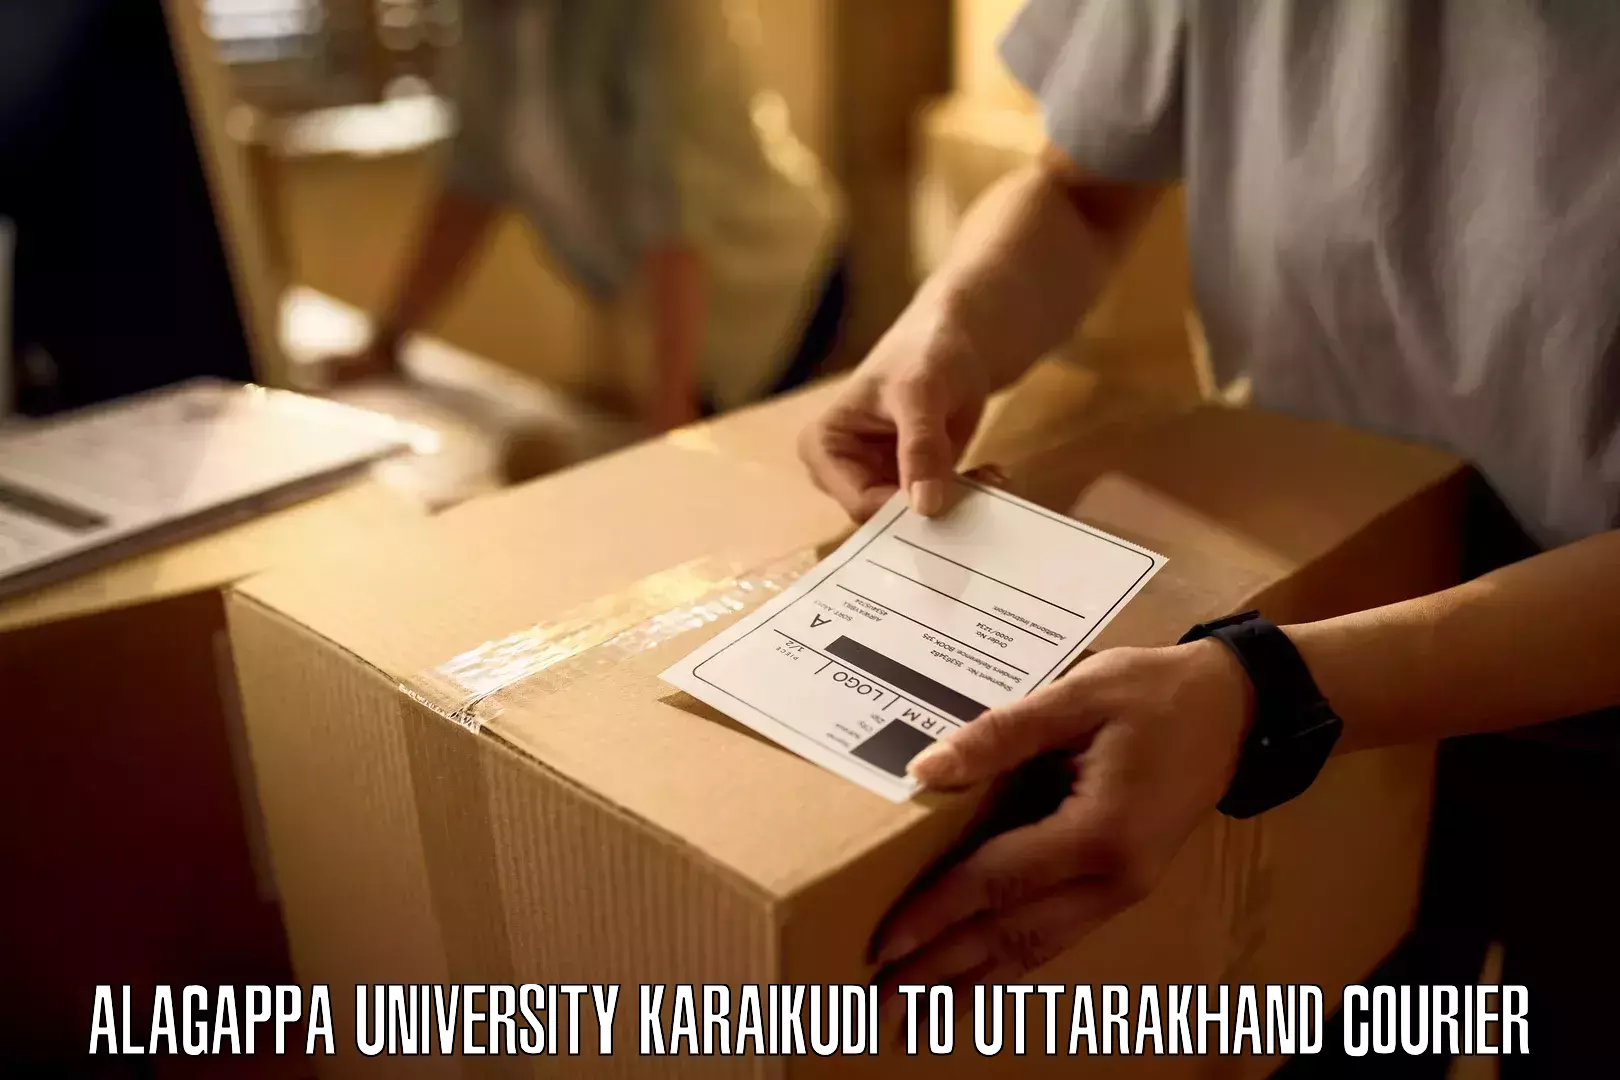 Cash on delivery service Alagappa University Karaikudi to Mussoorie